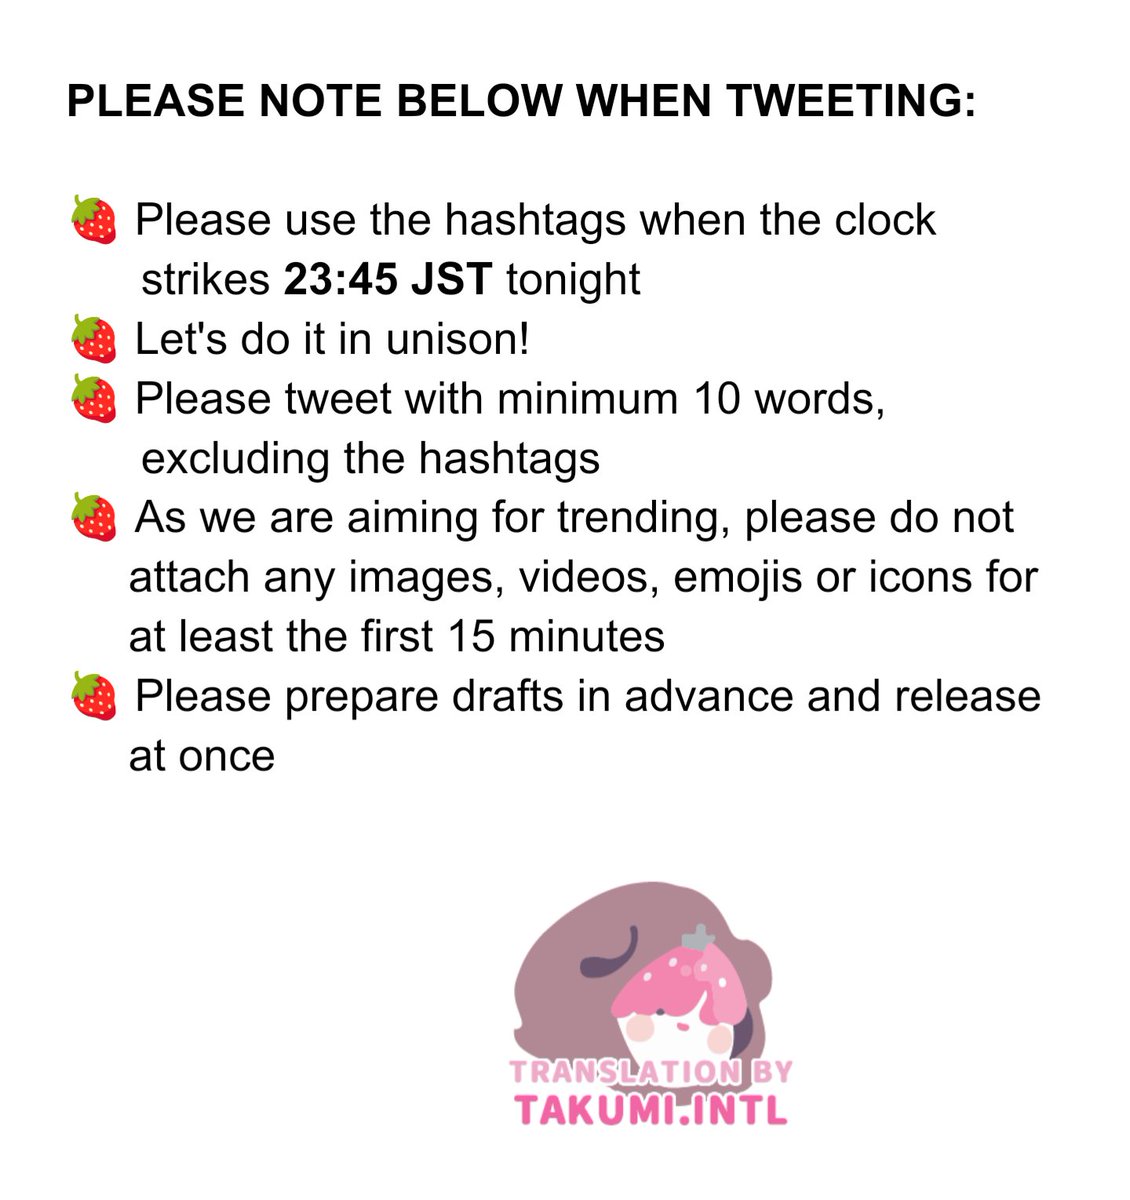 [📢] TAKUMI'S 24TH BIRTHDAY HASHTAG EVENT

Join us celebrating Takumi's 24th birthday, tonight at 23:45 JST 🎉

#/HappyTakumiDay
#/拓実24歳もゆったりまったりね 
(the 24 year old Takumi is also chill and relaxed)

※ Please remove '/' before posting
#川西拓実 #KAWANISHITAKUMI #JO1